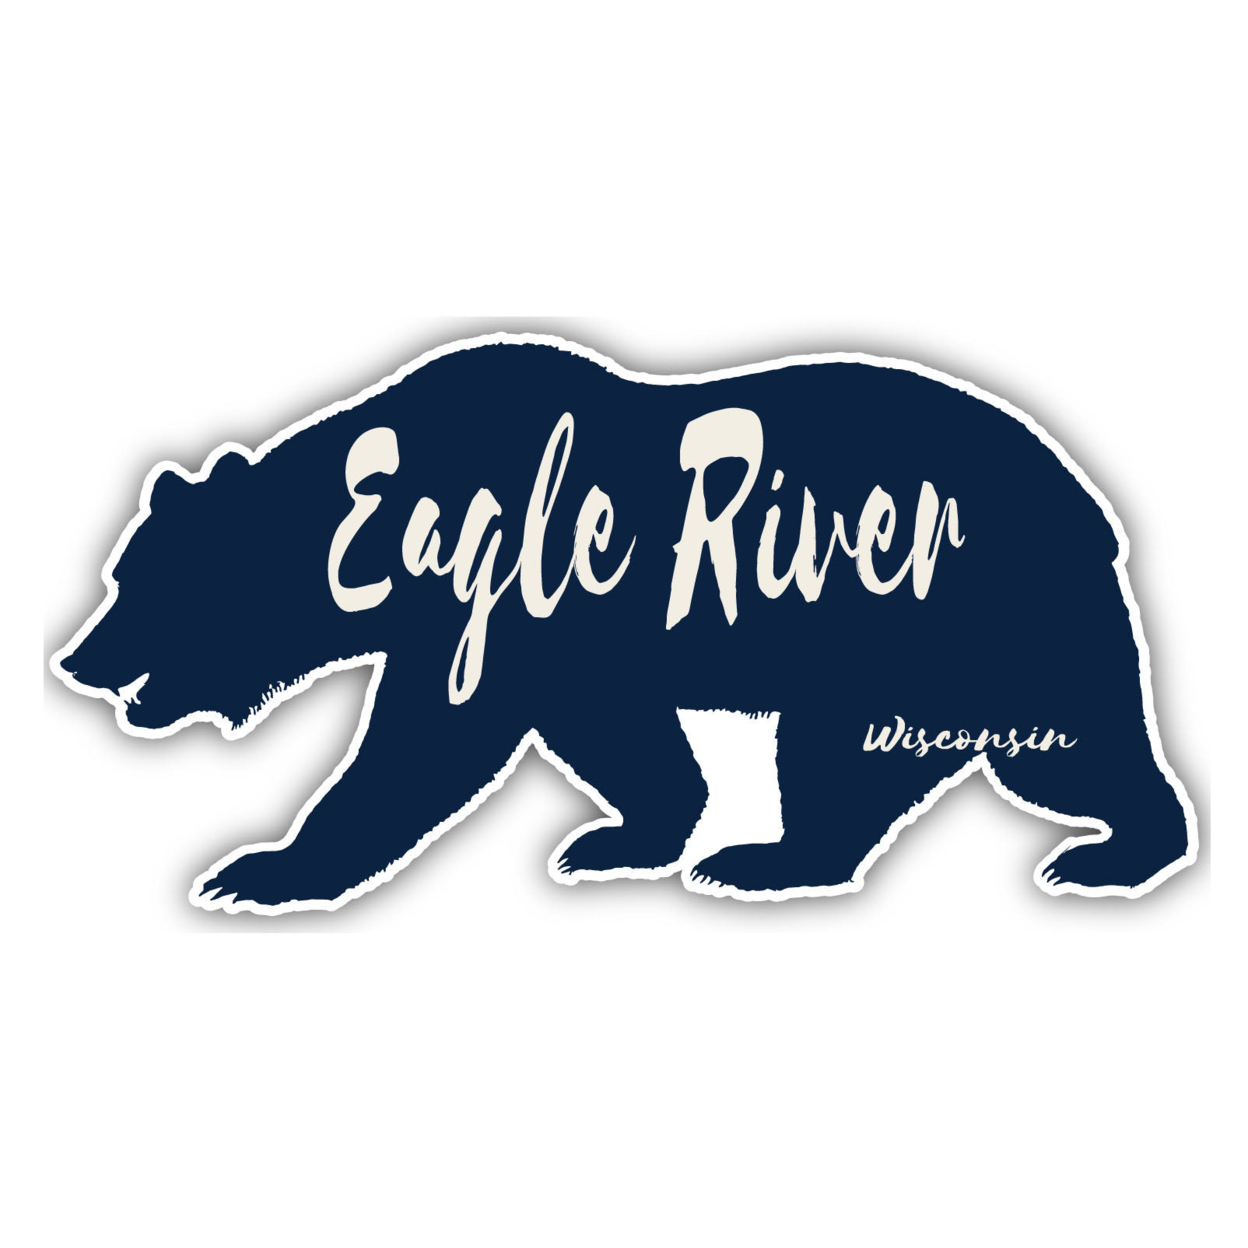 Eagle River Wisconsin Souvenir Decorative Stickers (Choose Theme And Size) - Single Unit, 4-Inch, Bear